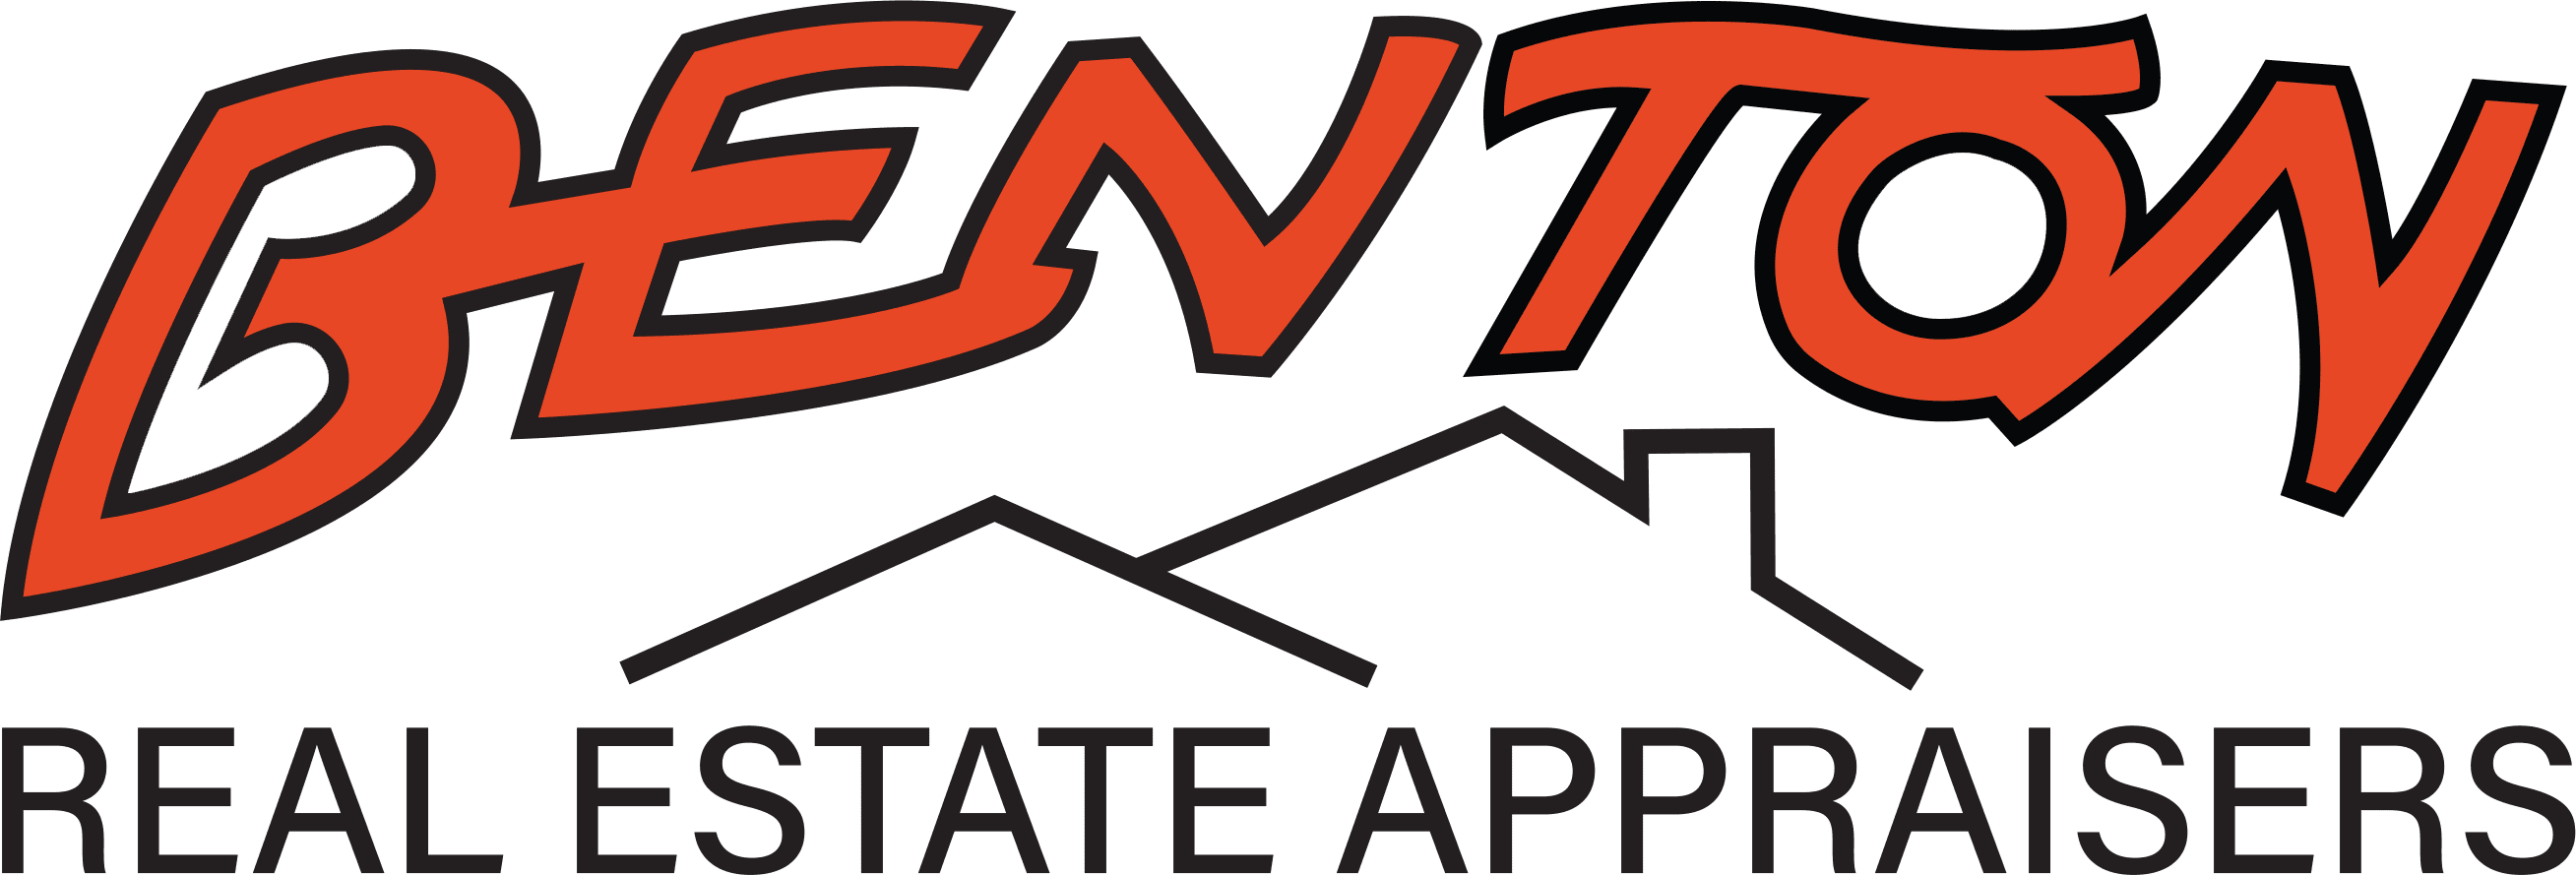 Benton Real Estate Appraisers logo